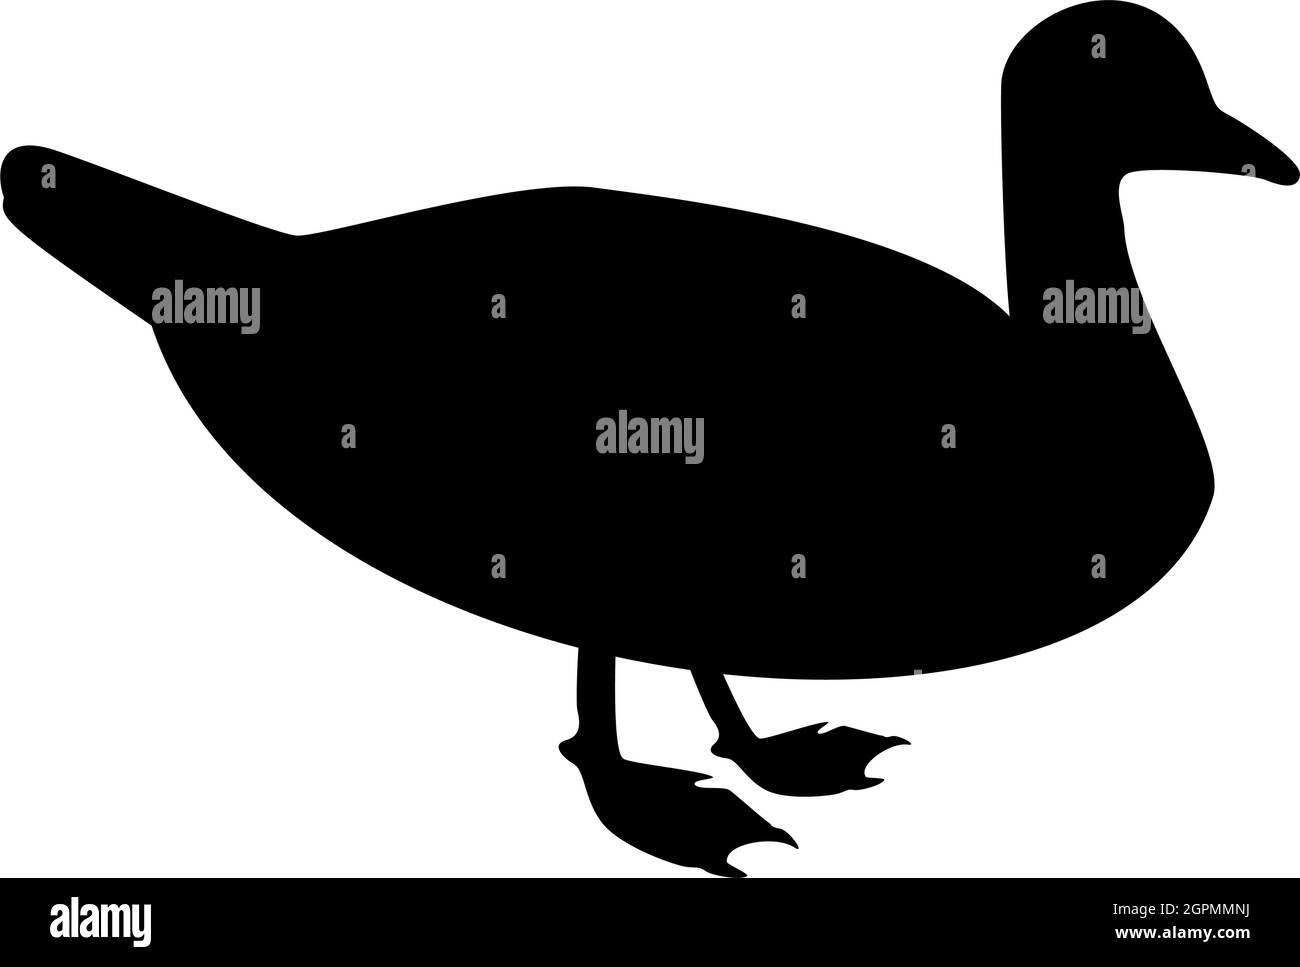 Silhouette Ente männlich Stockente Vogel Wasservögel Wasservögel Geflügel Geflügel Canard schwarz Farbe Vektor Illustration flachen Stil Bild Stock Vektor